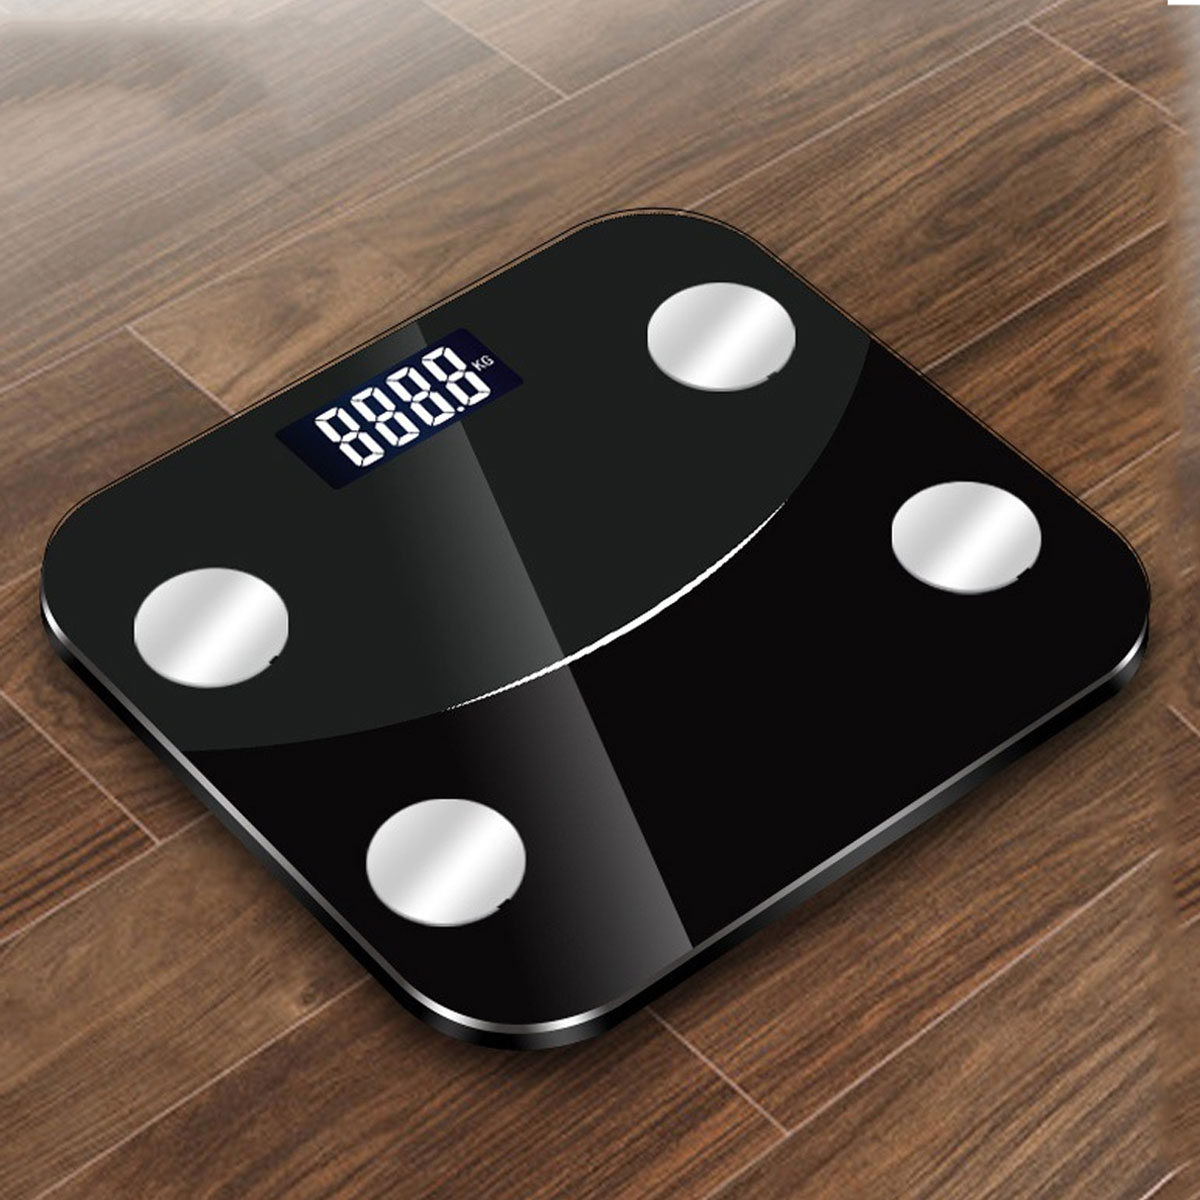 180KG-Measurement-Range-Bluetooth-Weight-Scale-With-Smart-APP-LED-Digital-Display-Bathroom-Body-Weig-1706885-11